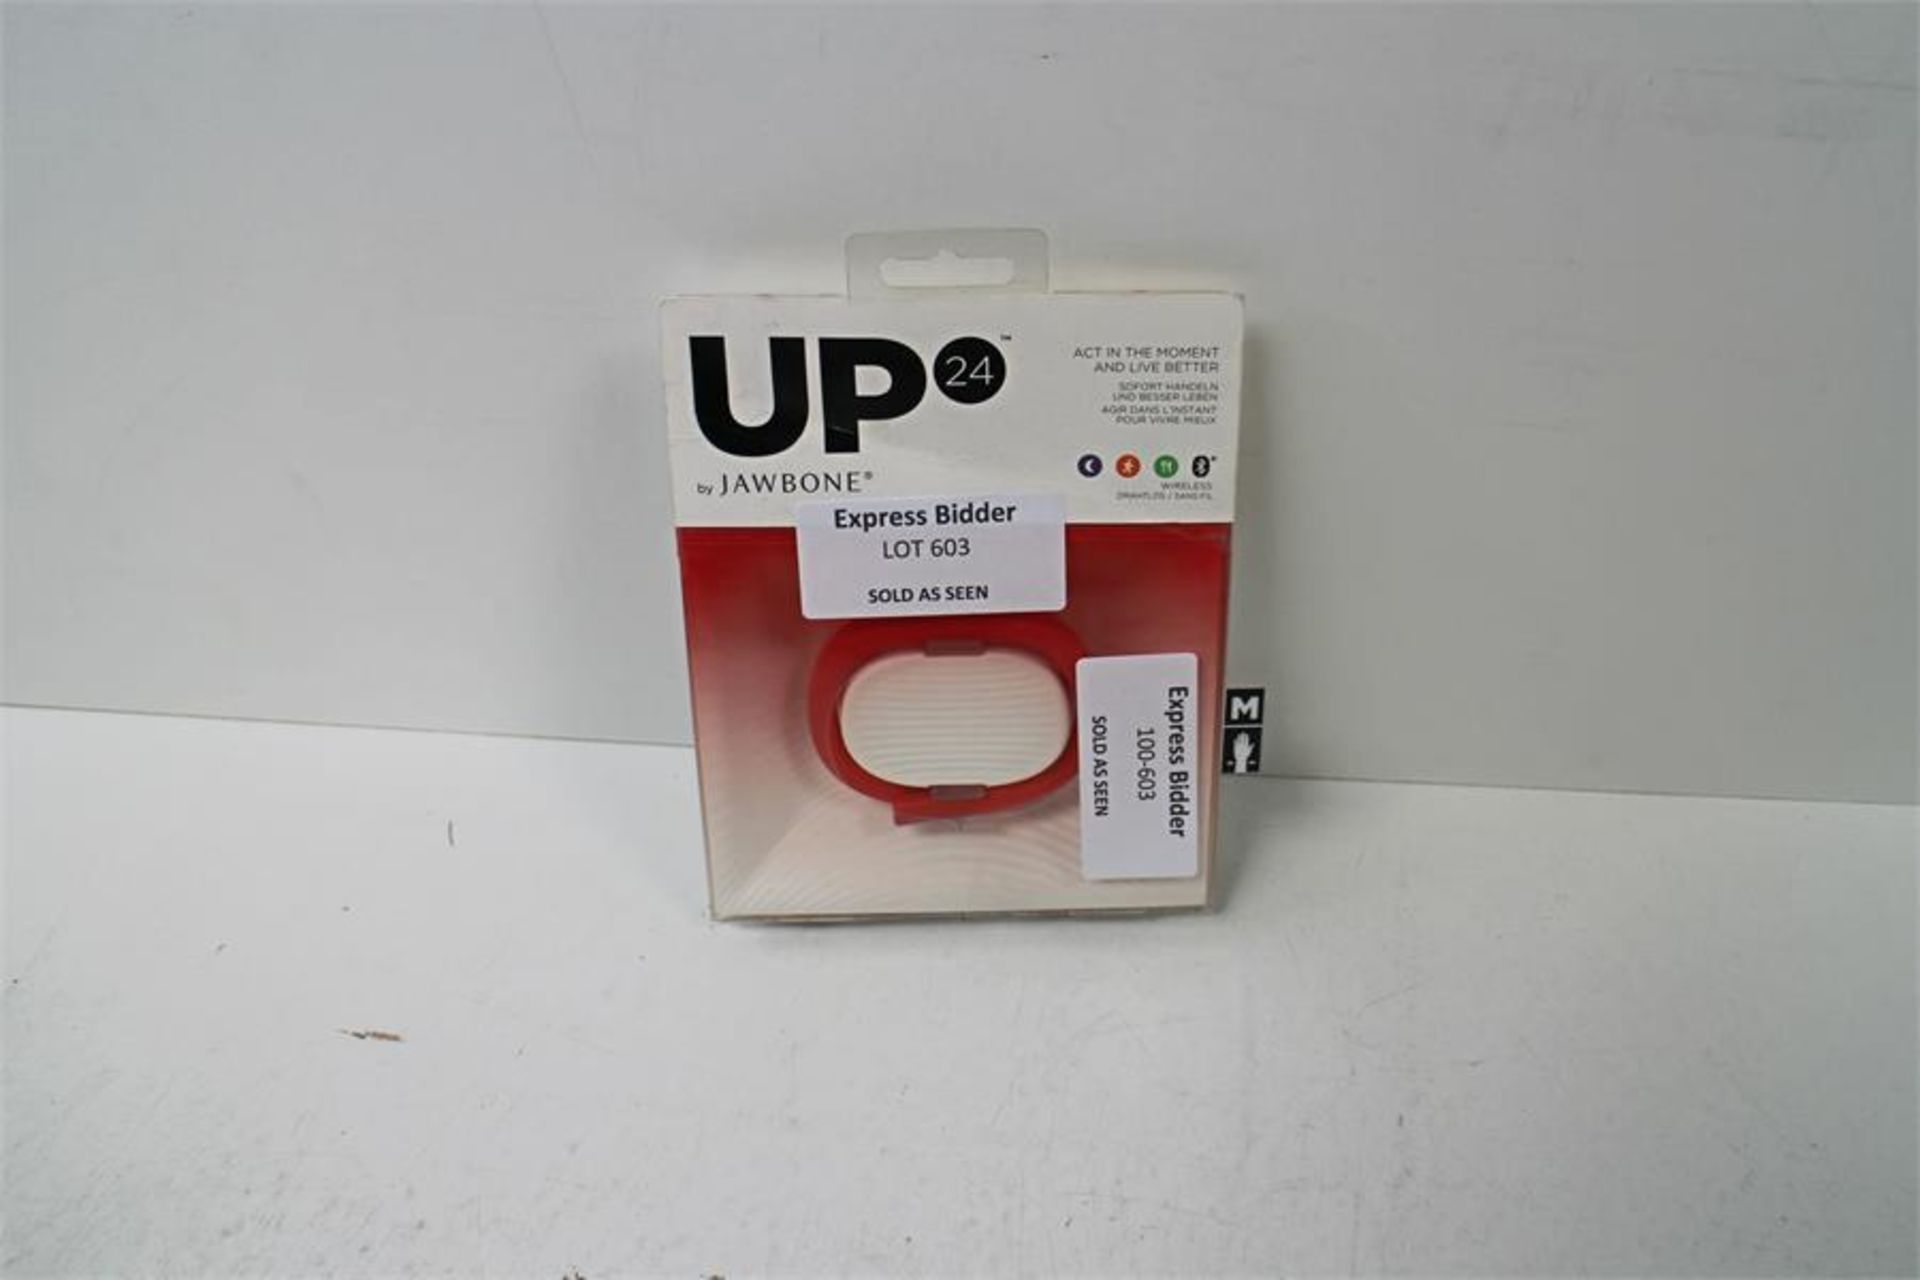 UP24 by Jawbone Medium Wireless Activity and Sleep Tracking Wristband